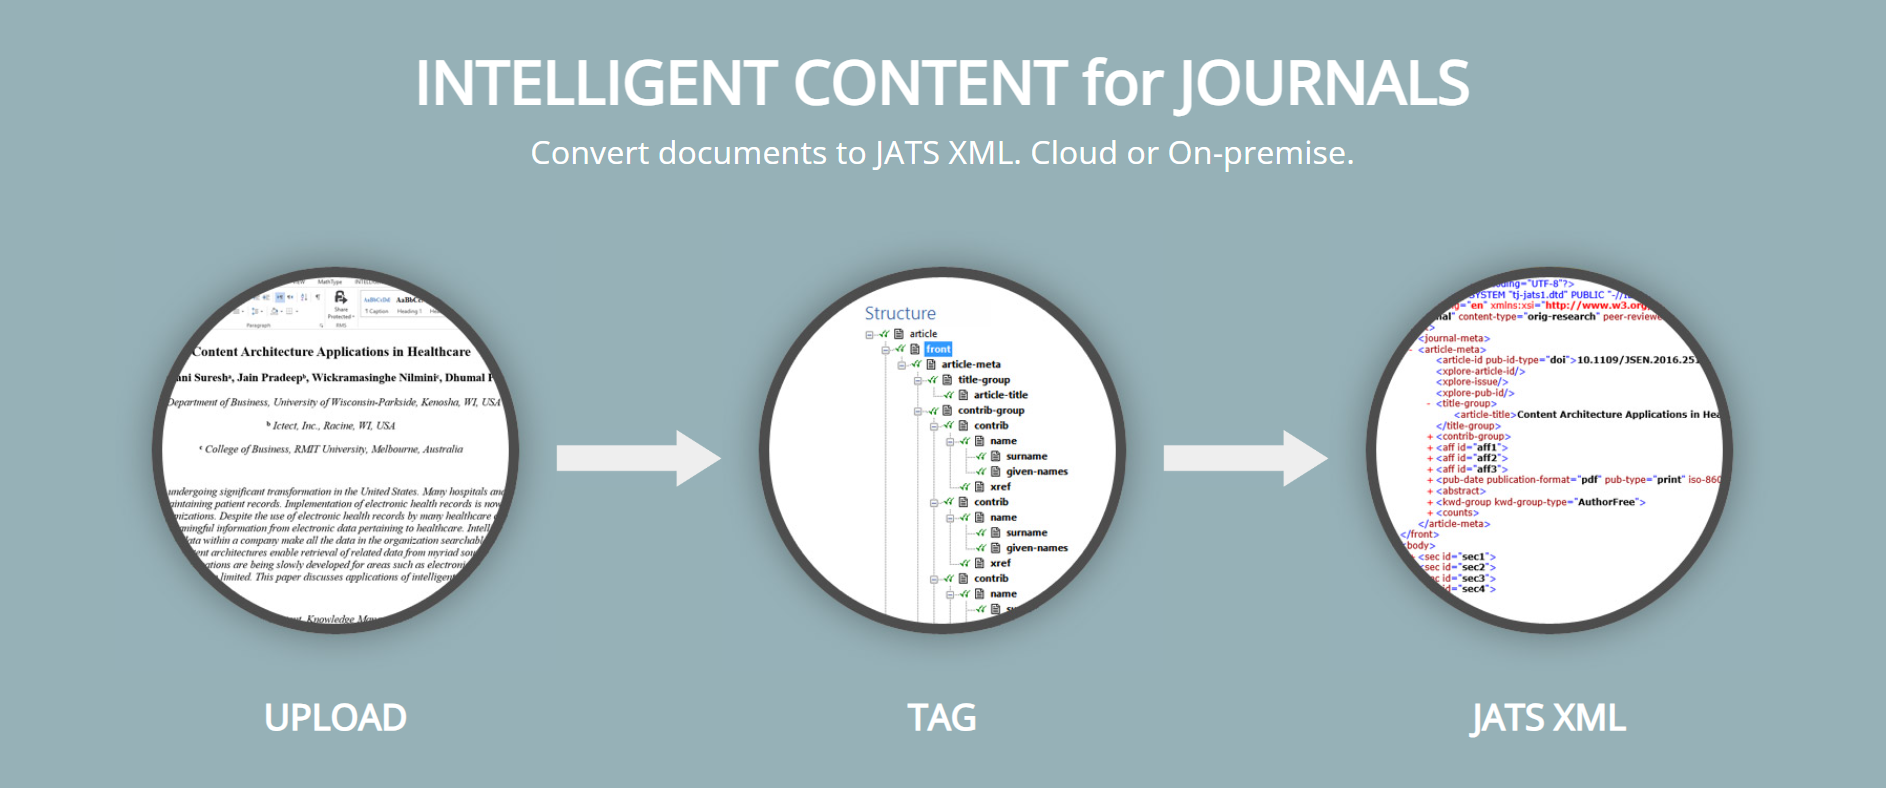 Intelligent Content Server for Journals